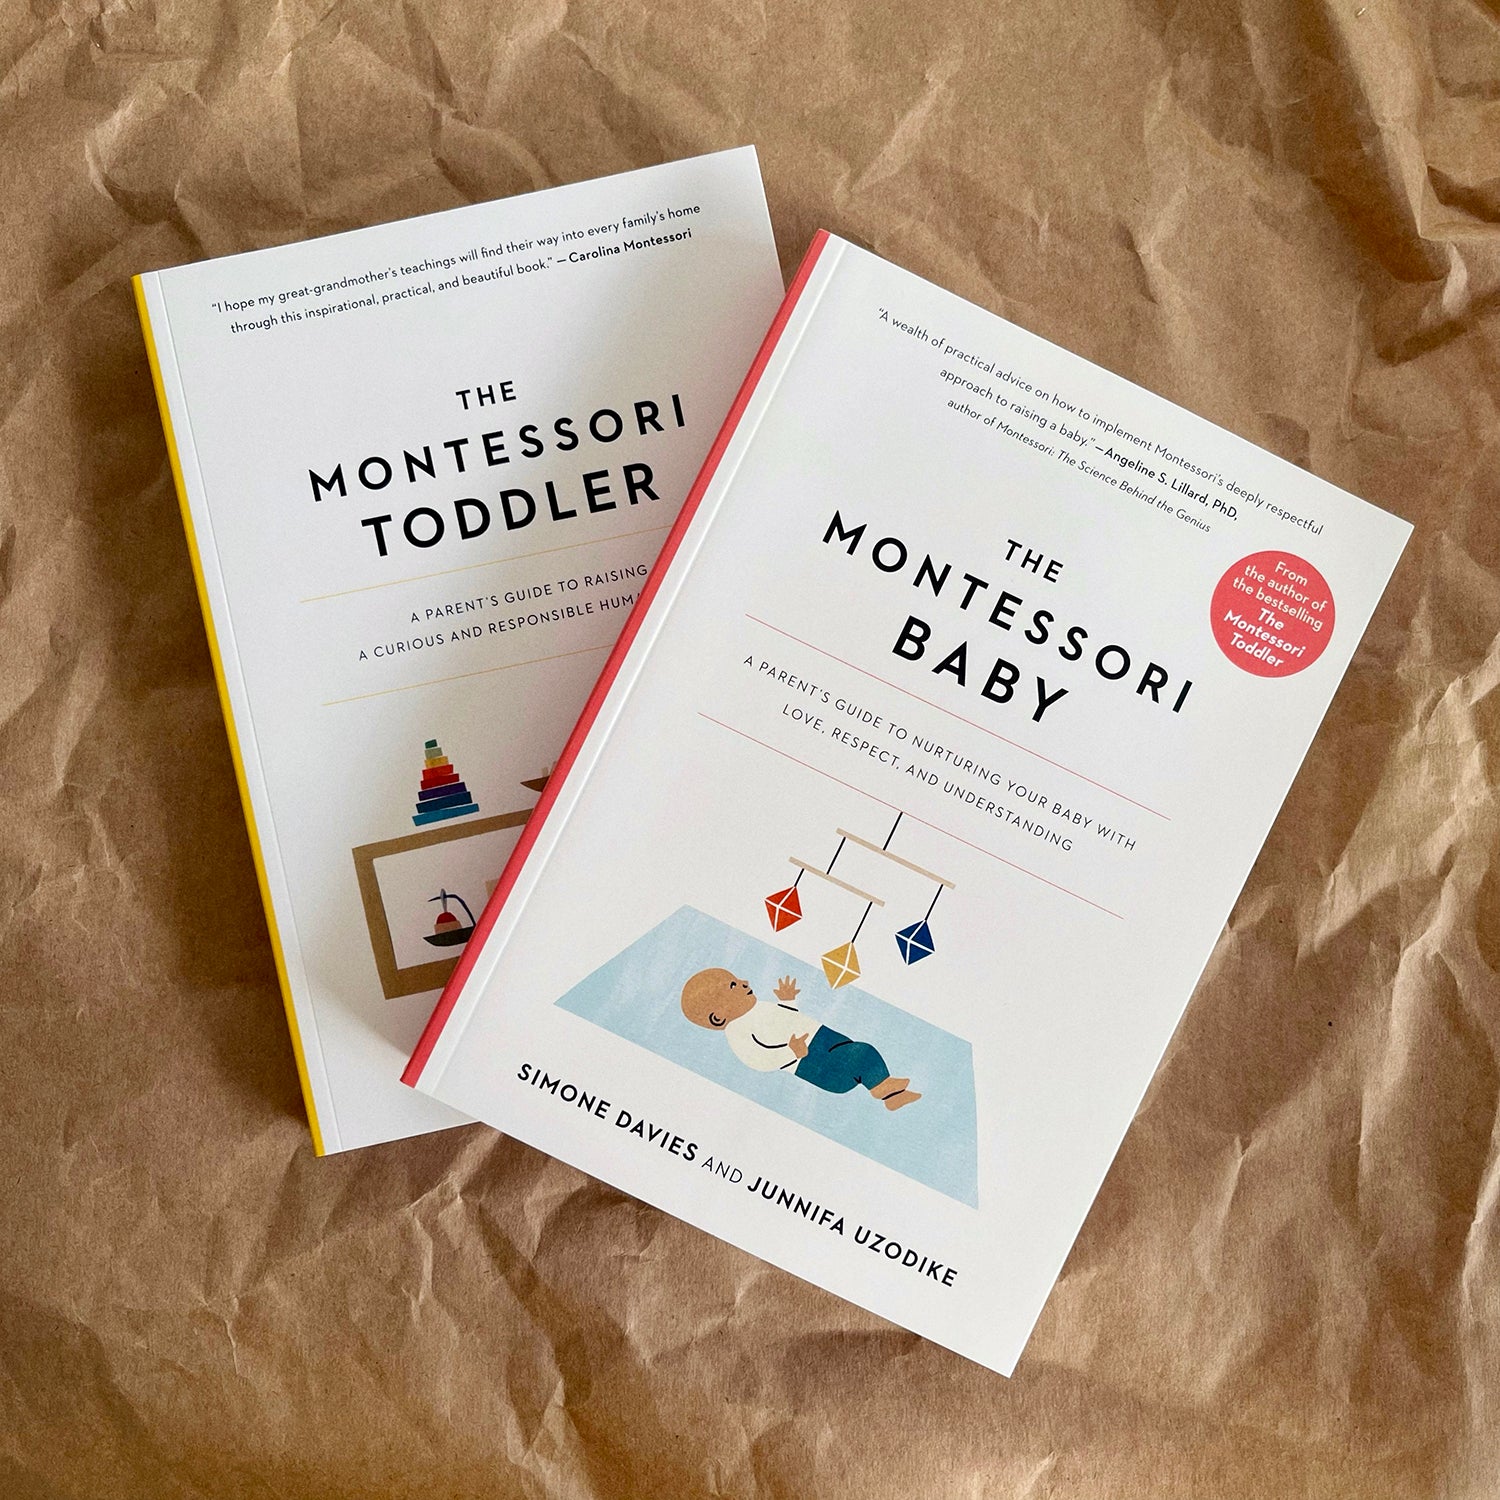 The Montessori Baby & The Montessori Toddler by Simone Davies